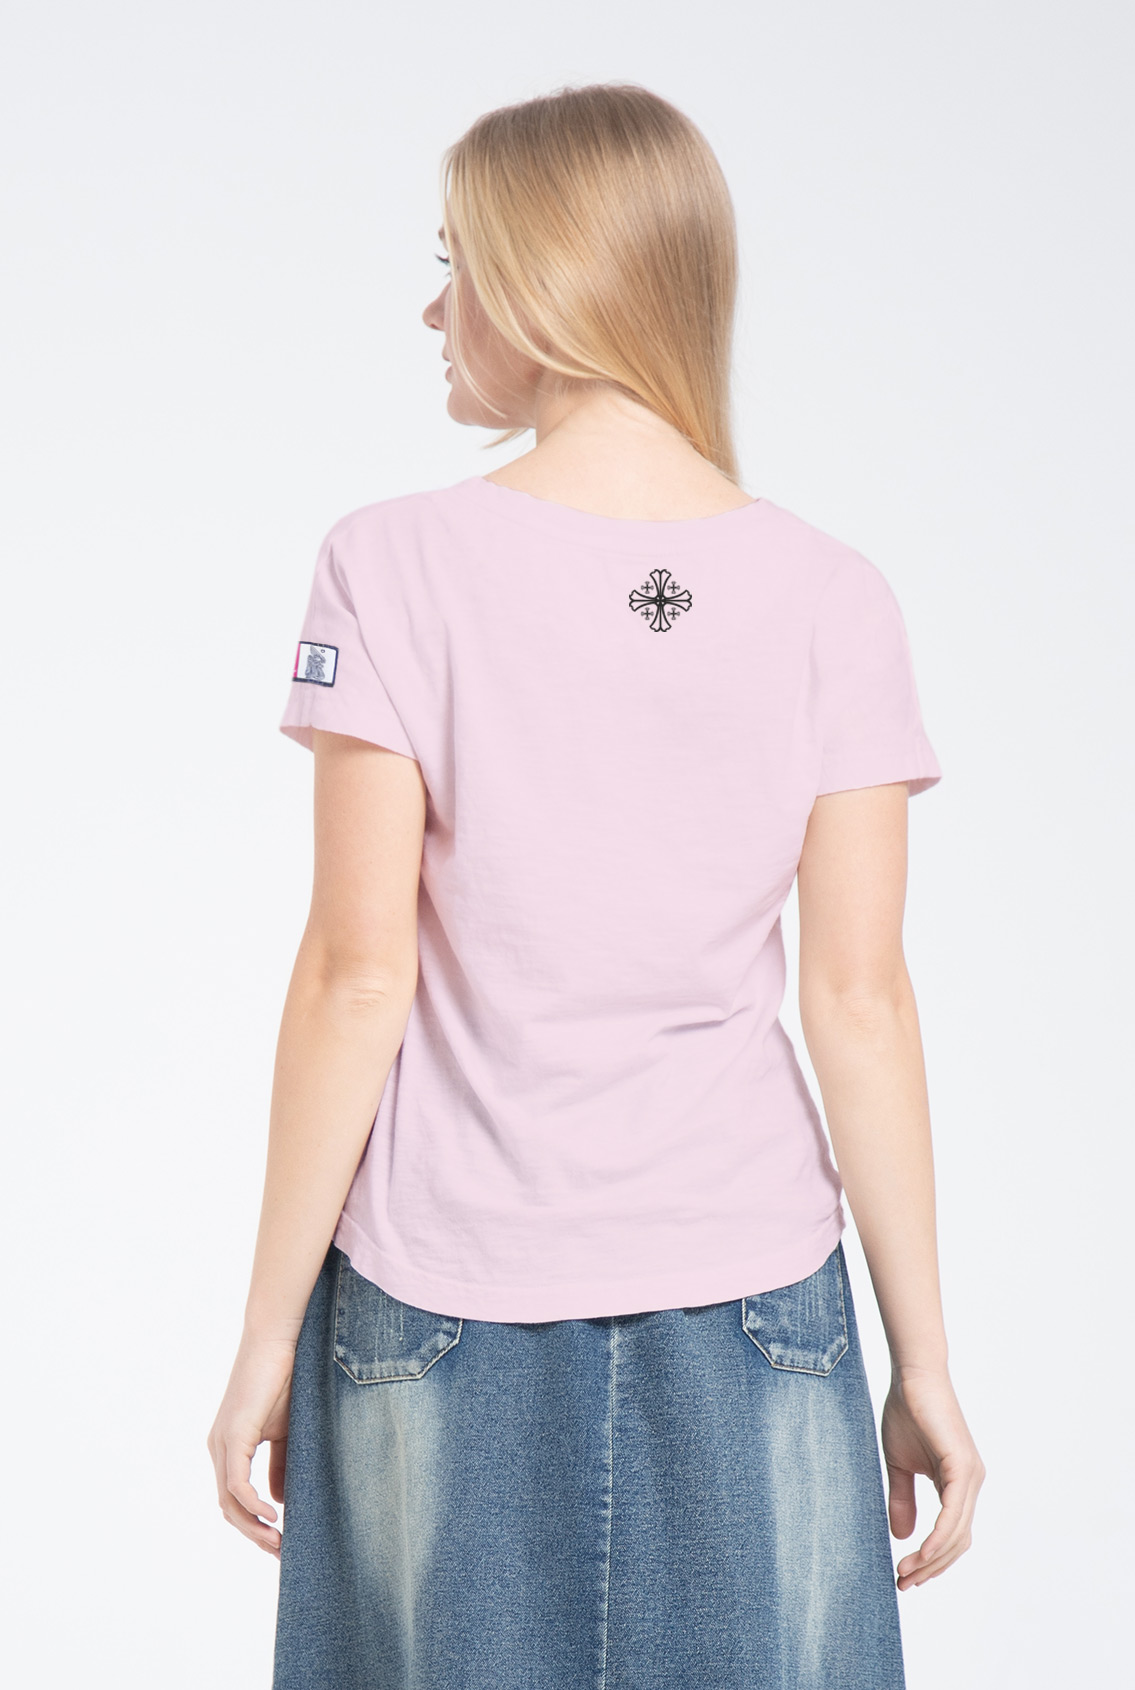 pink women's t-shirt with a cross